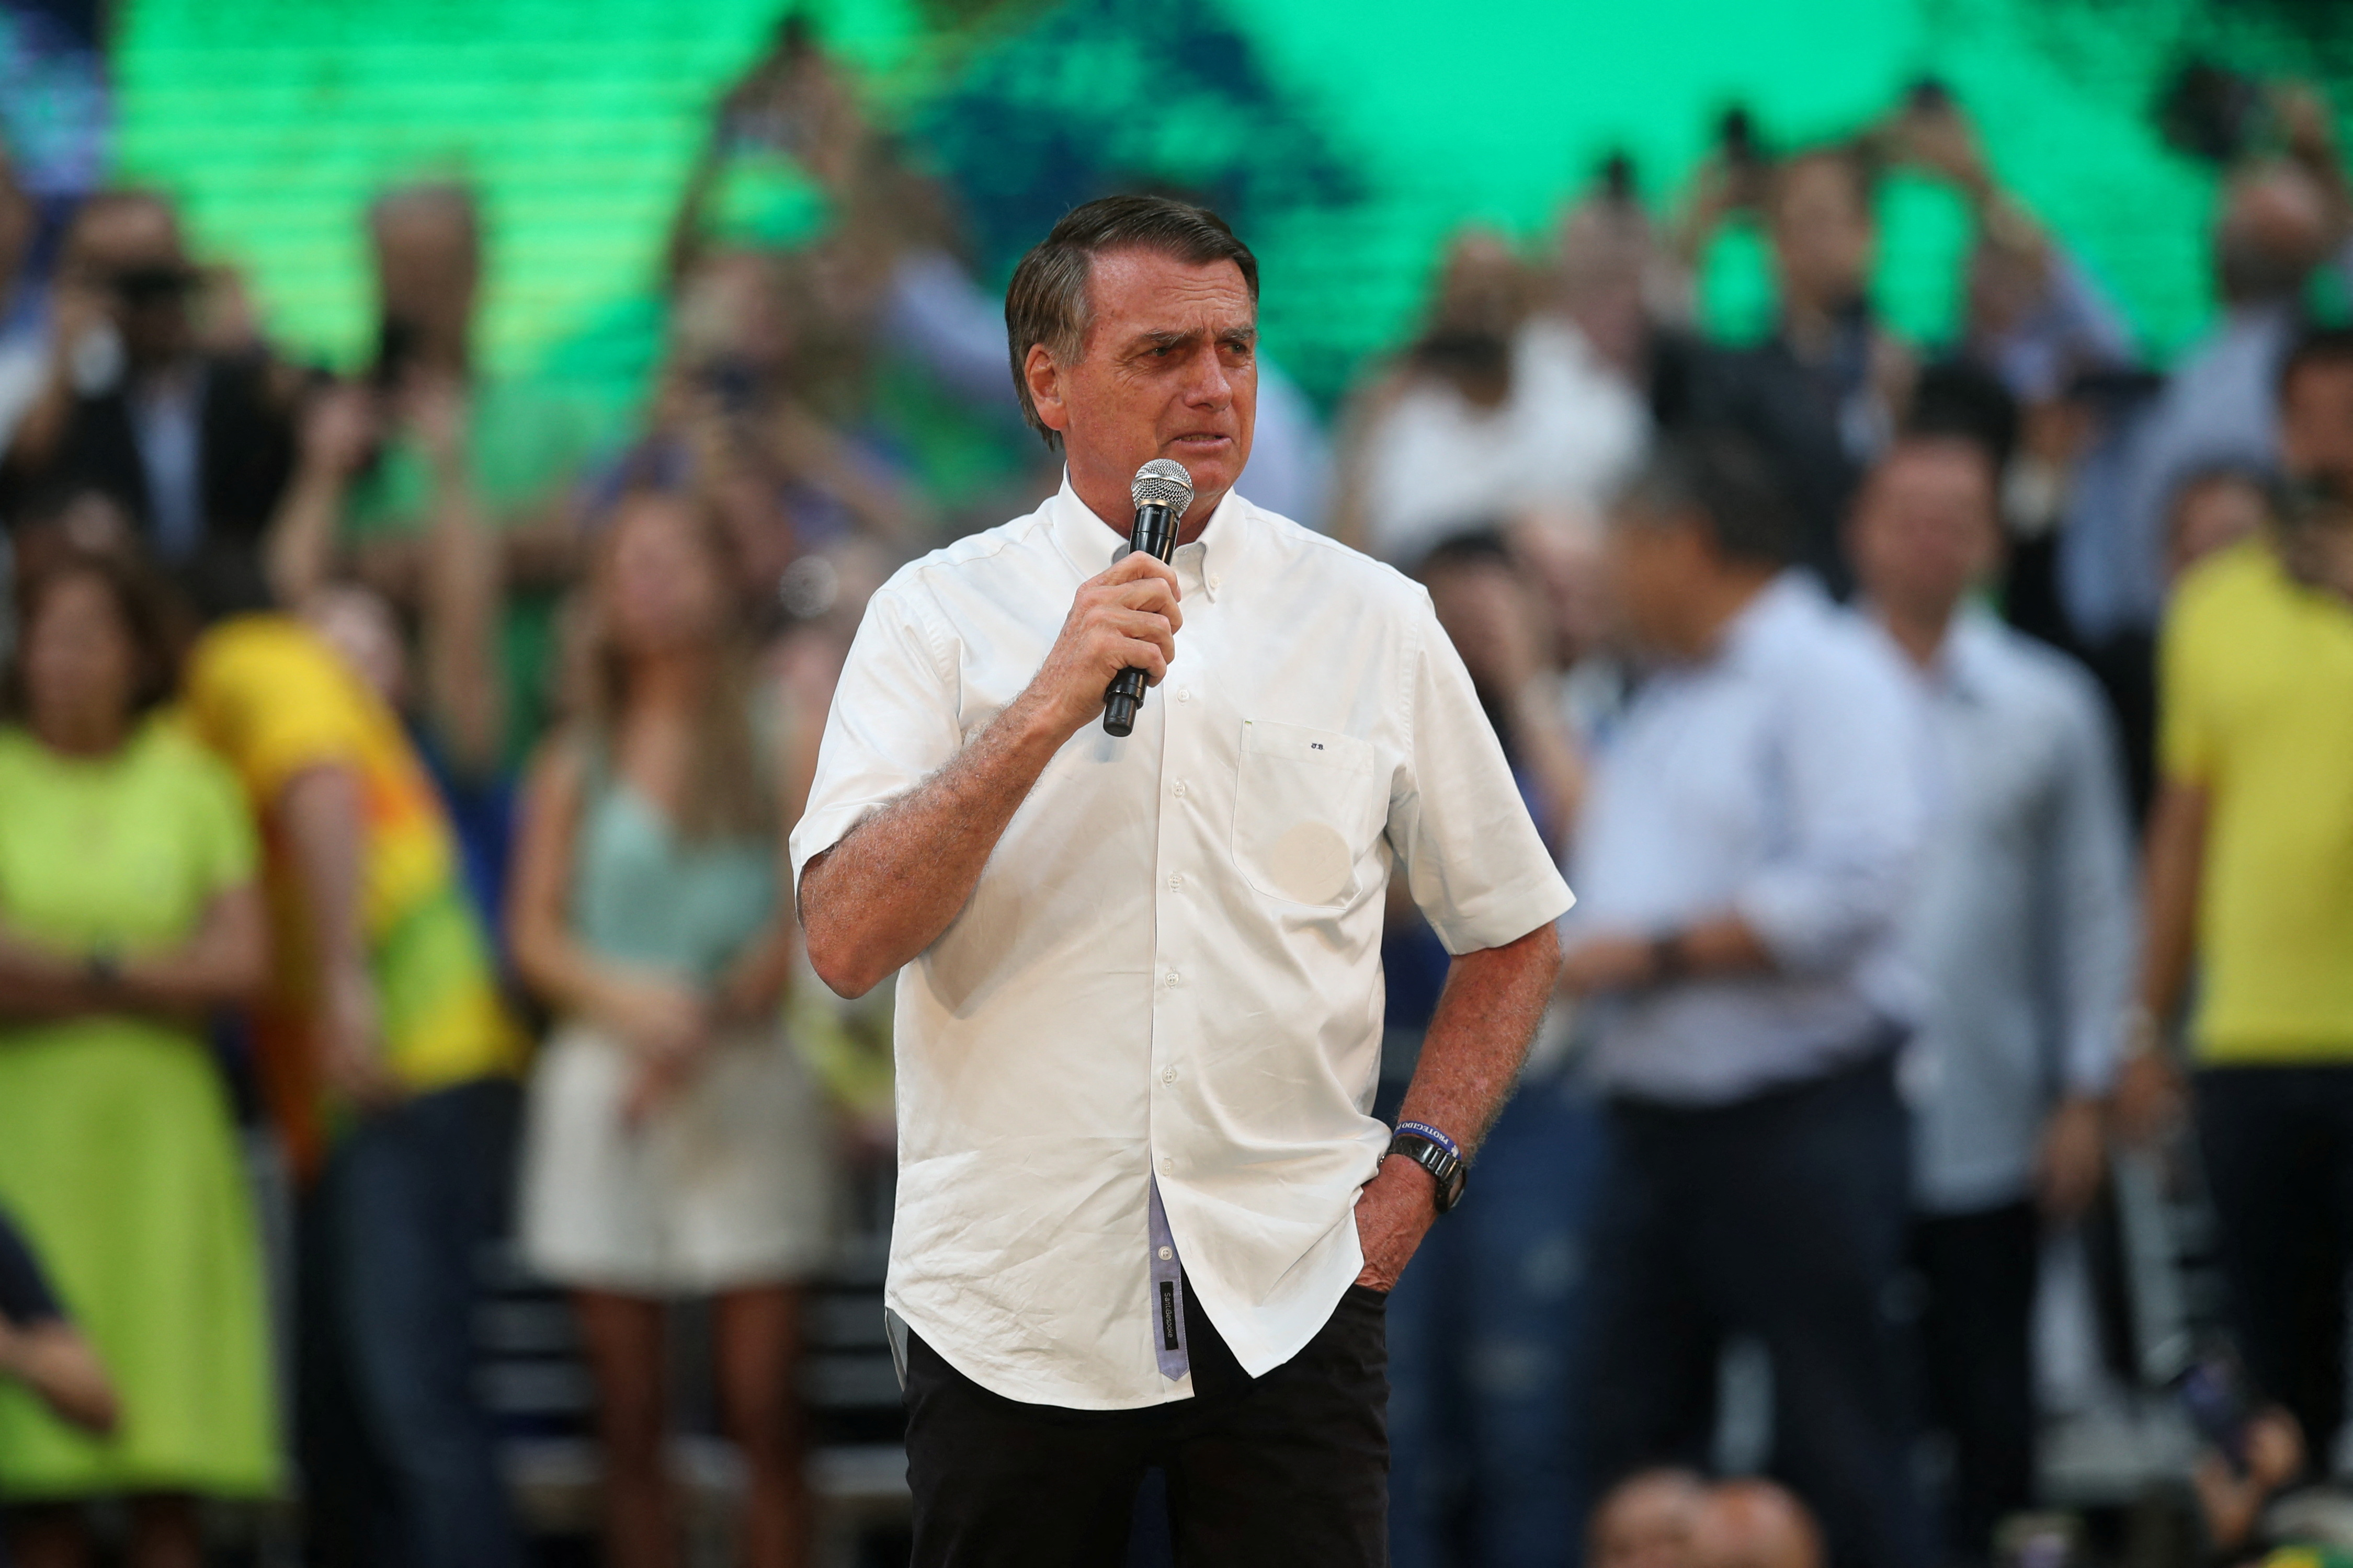 Brazil's President Bolsonaro launches his presidential candidacy for re-election, in Rio de Janeiro